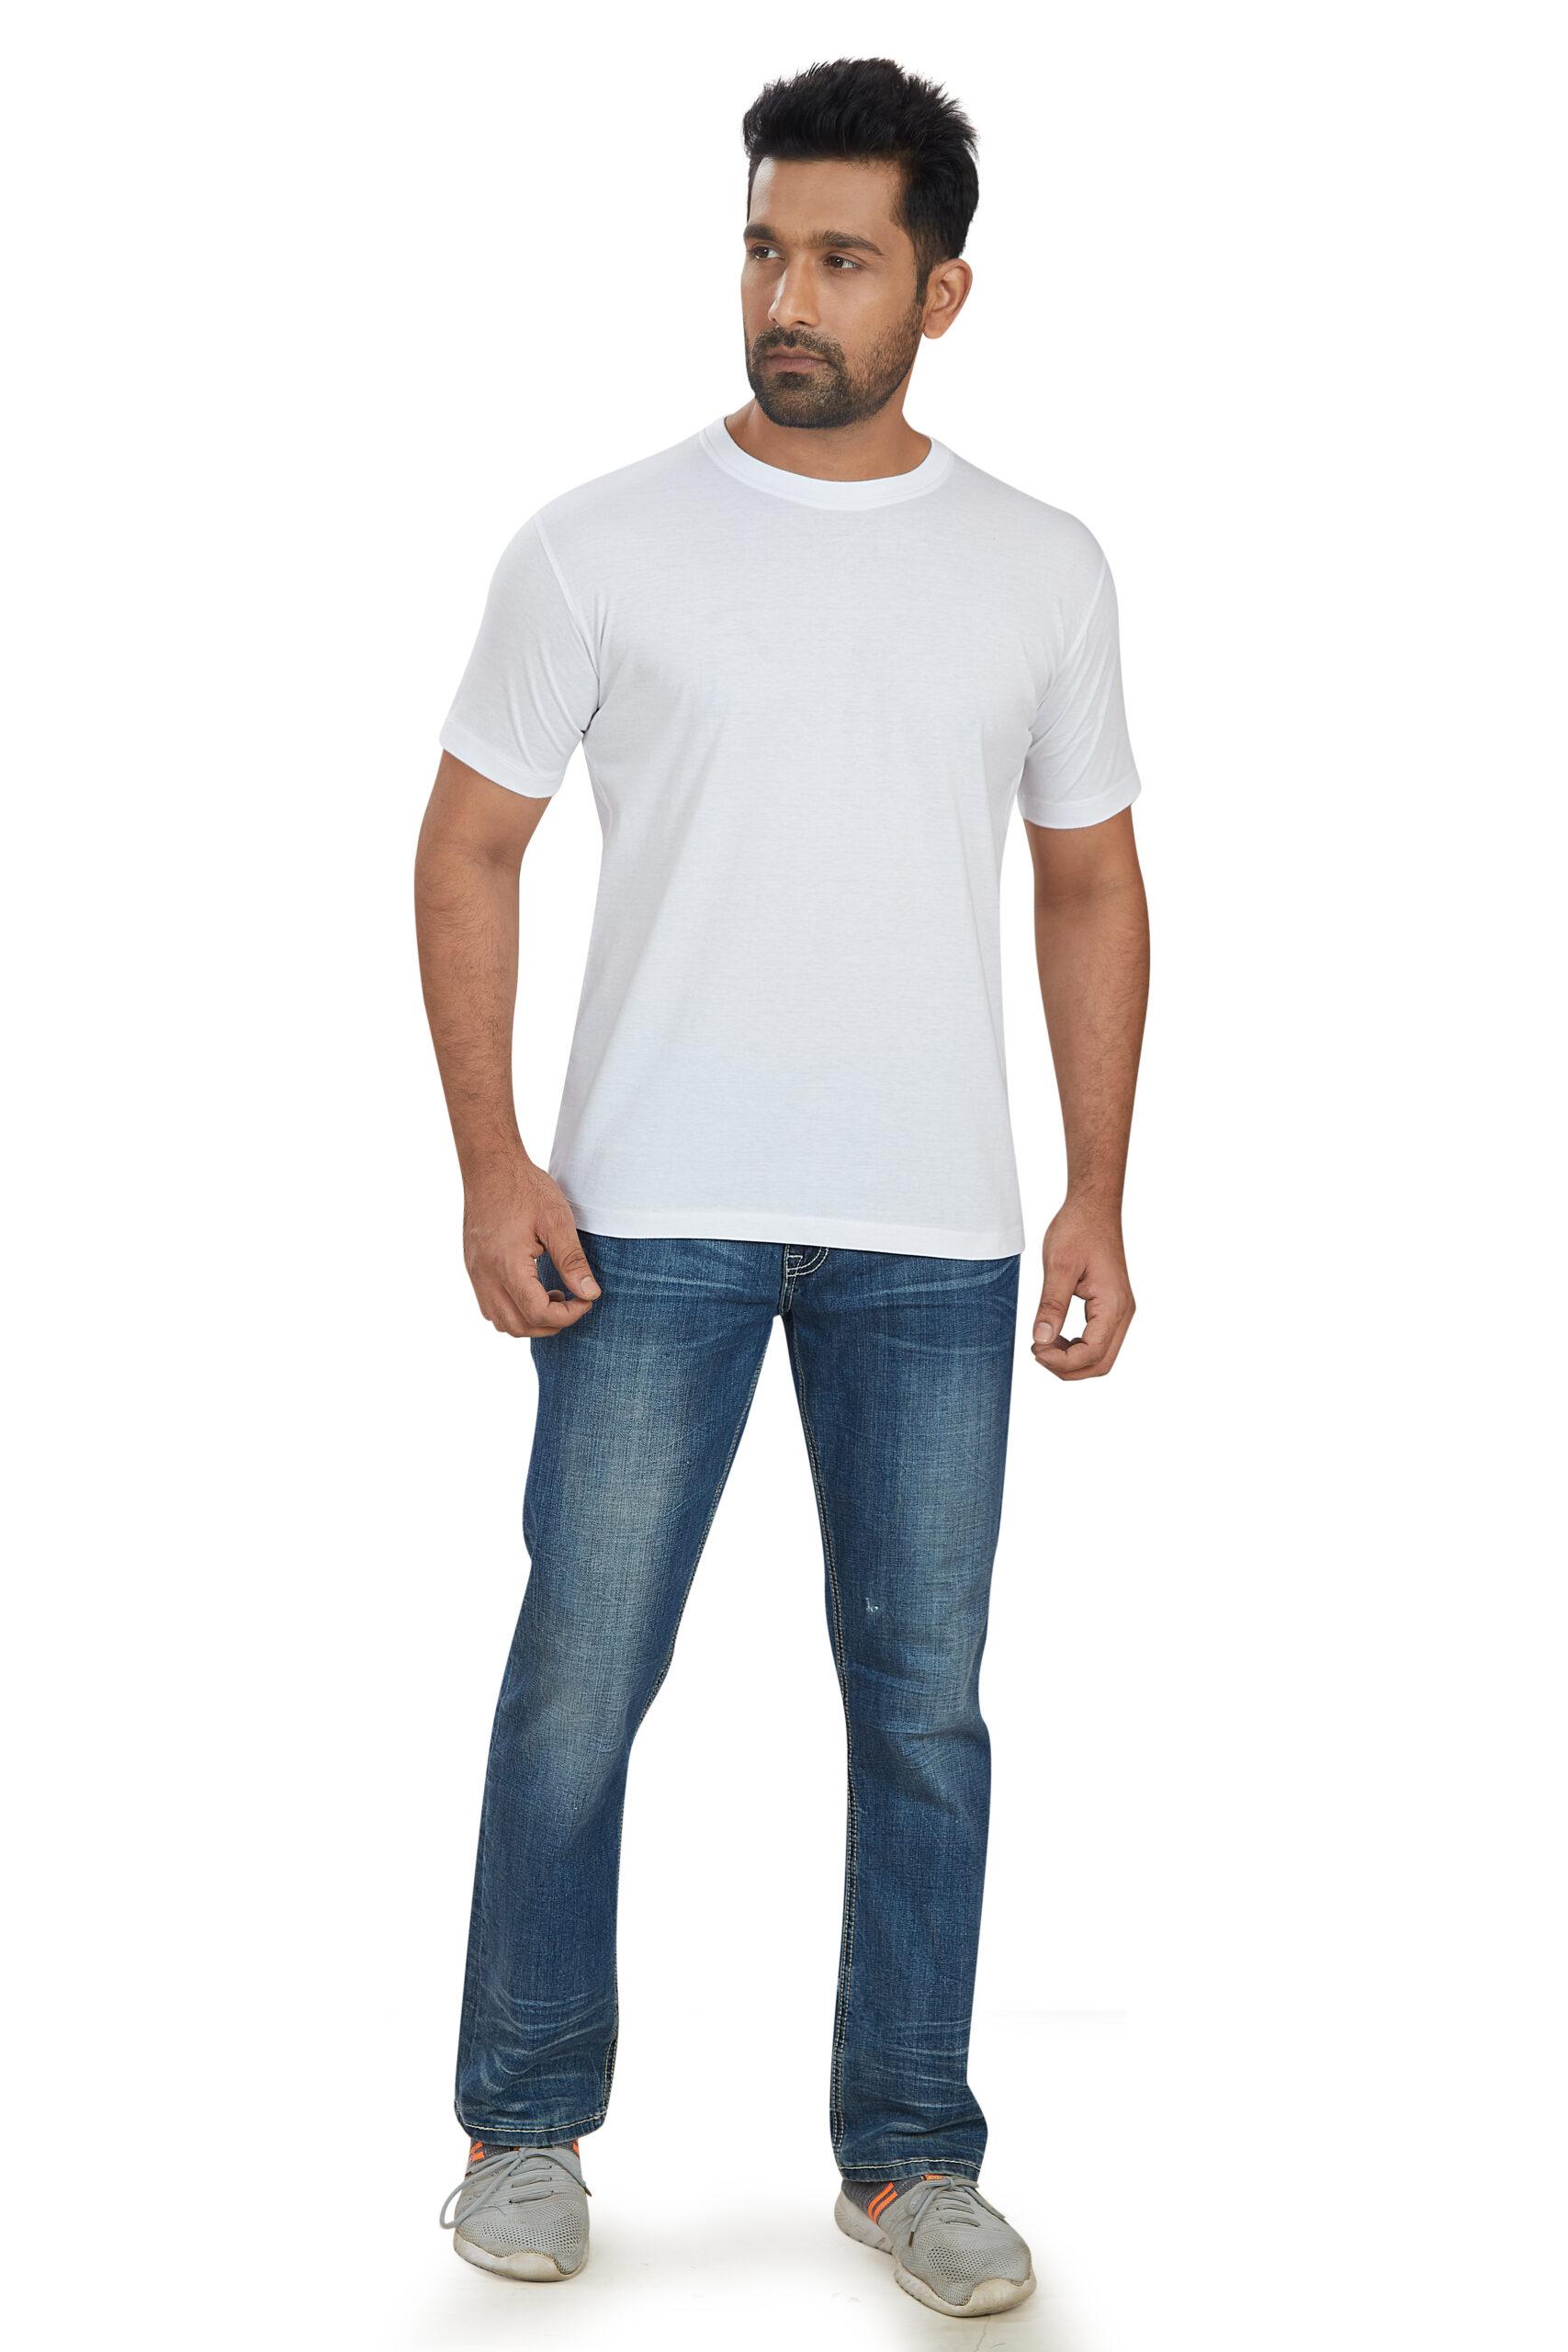 White Plain T-Shirt - Hawkz Lifestyle